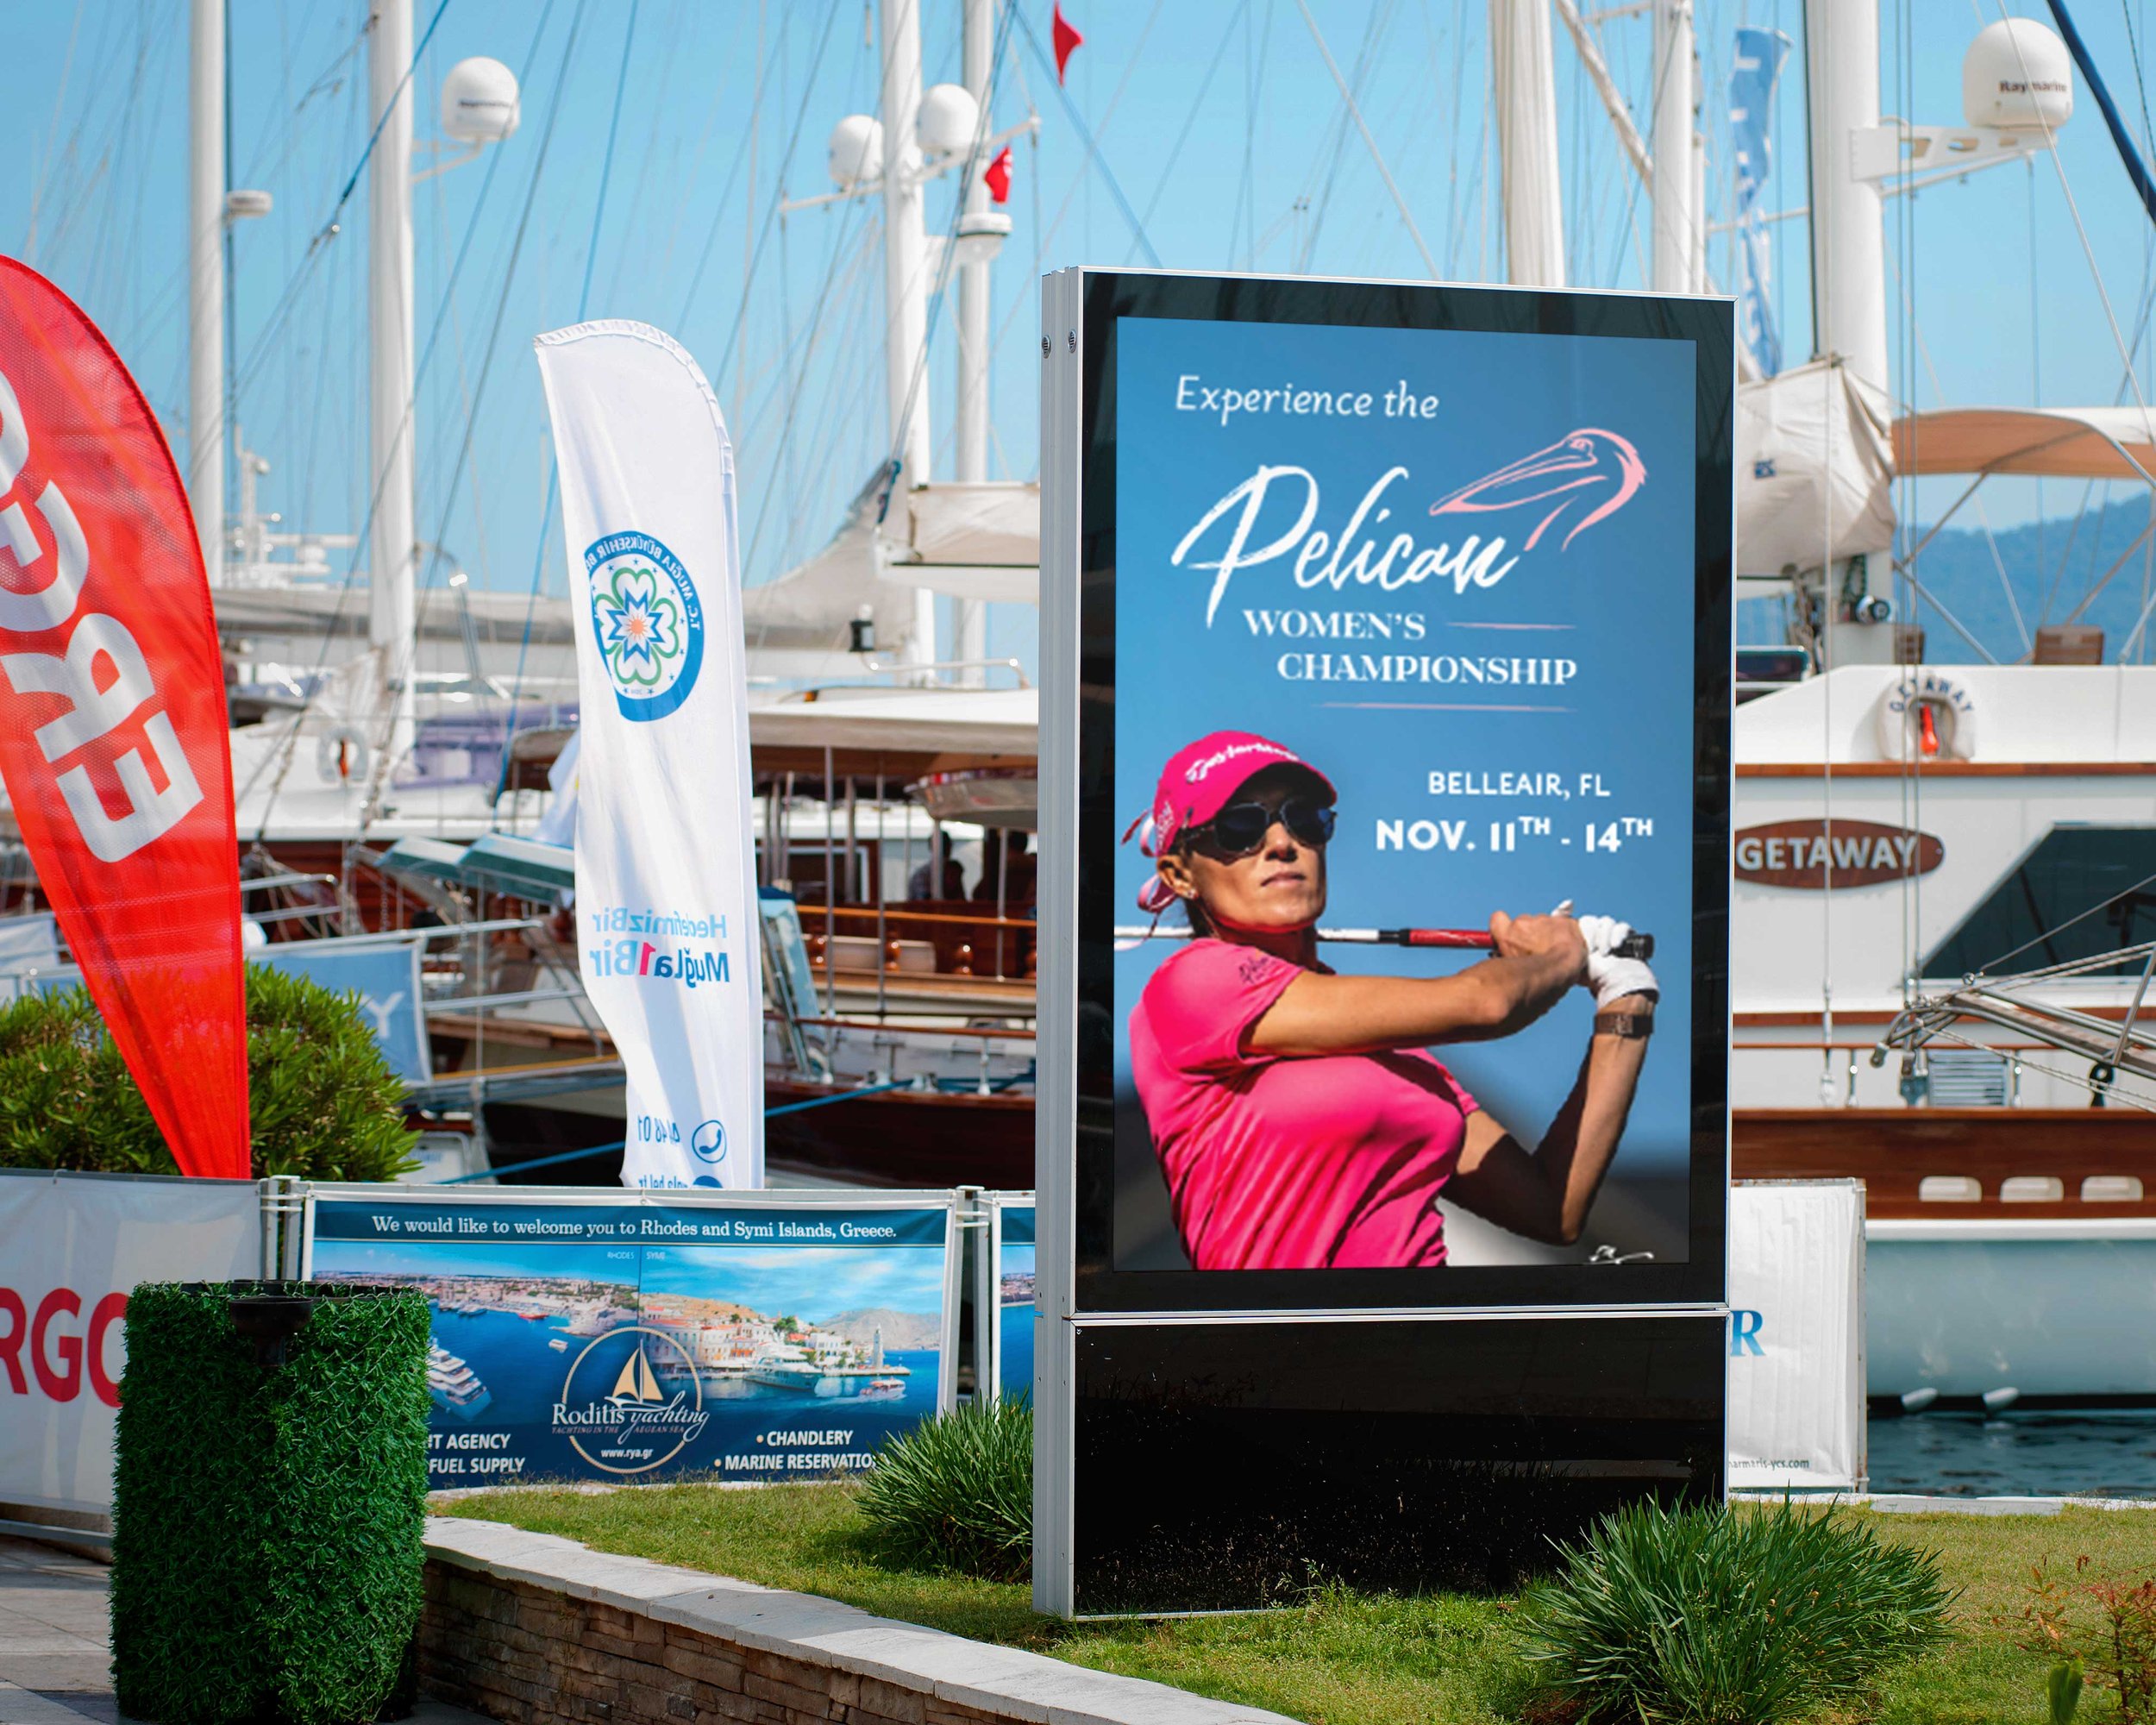  Pelican Women's Championship event advertisement poster. 